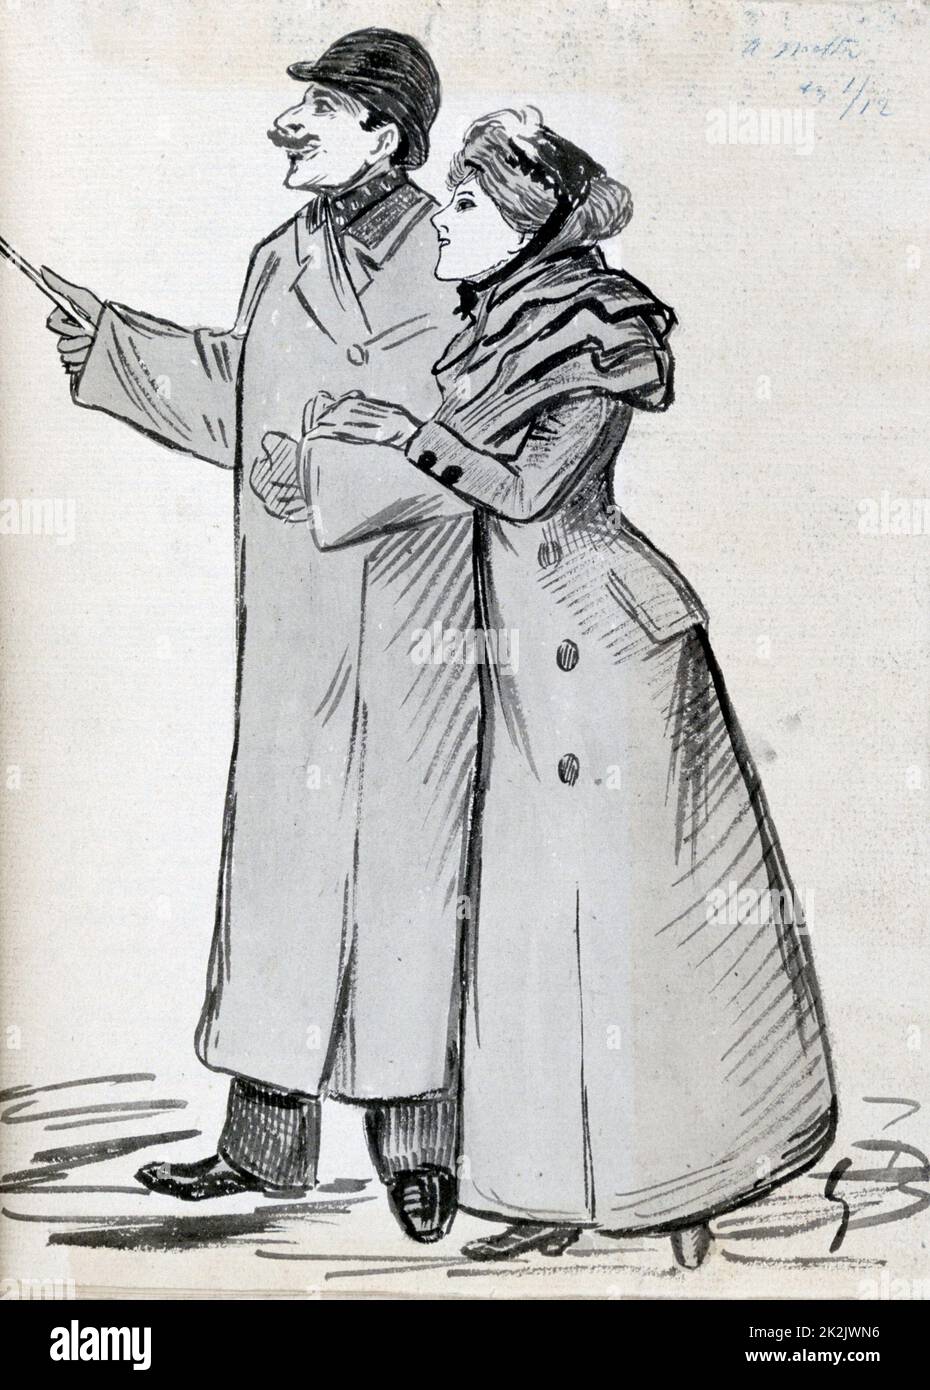 Guy de Maupassant das Paar, man with the Bowler hat', 1850-1893. Private Sammlung. Stockfoto